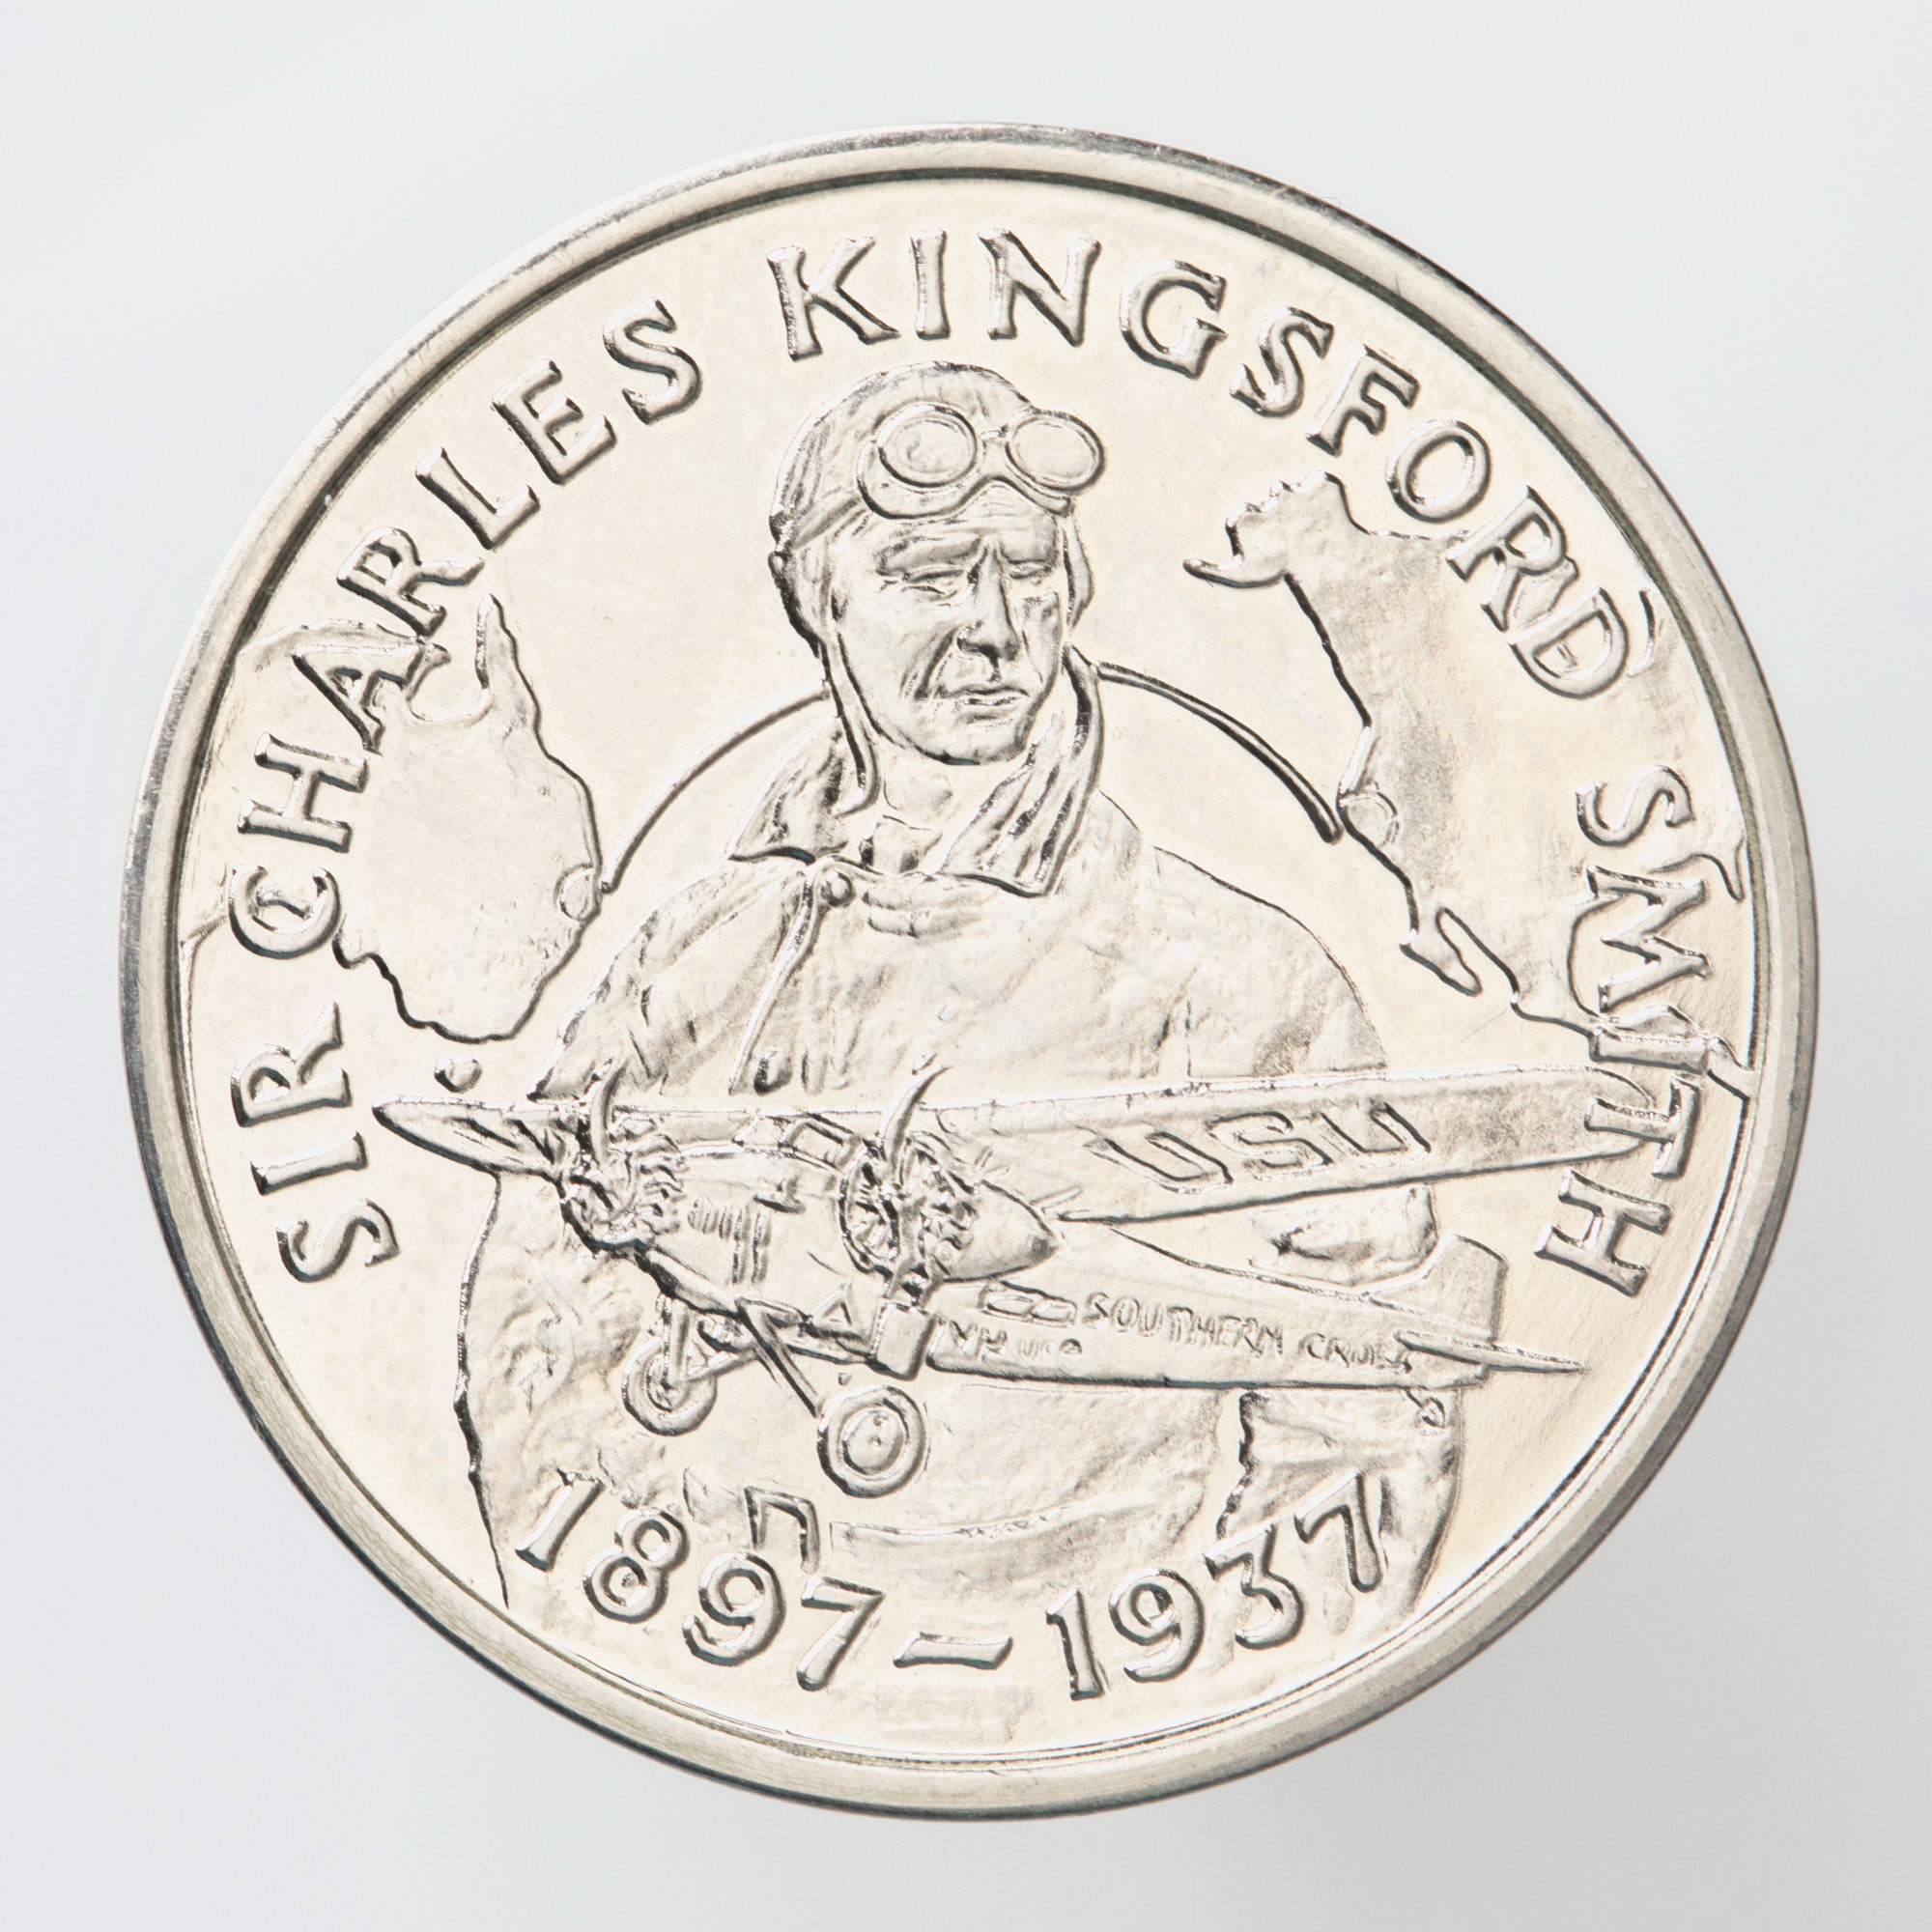 Australian bicentennial commemorative medal depicting Sir Charles Kingsford Smith.